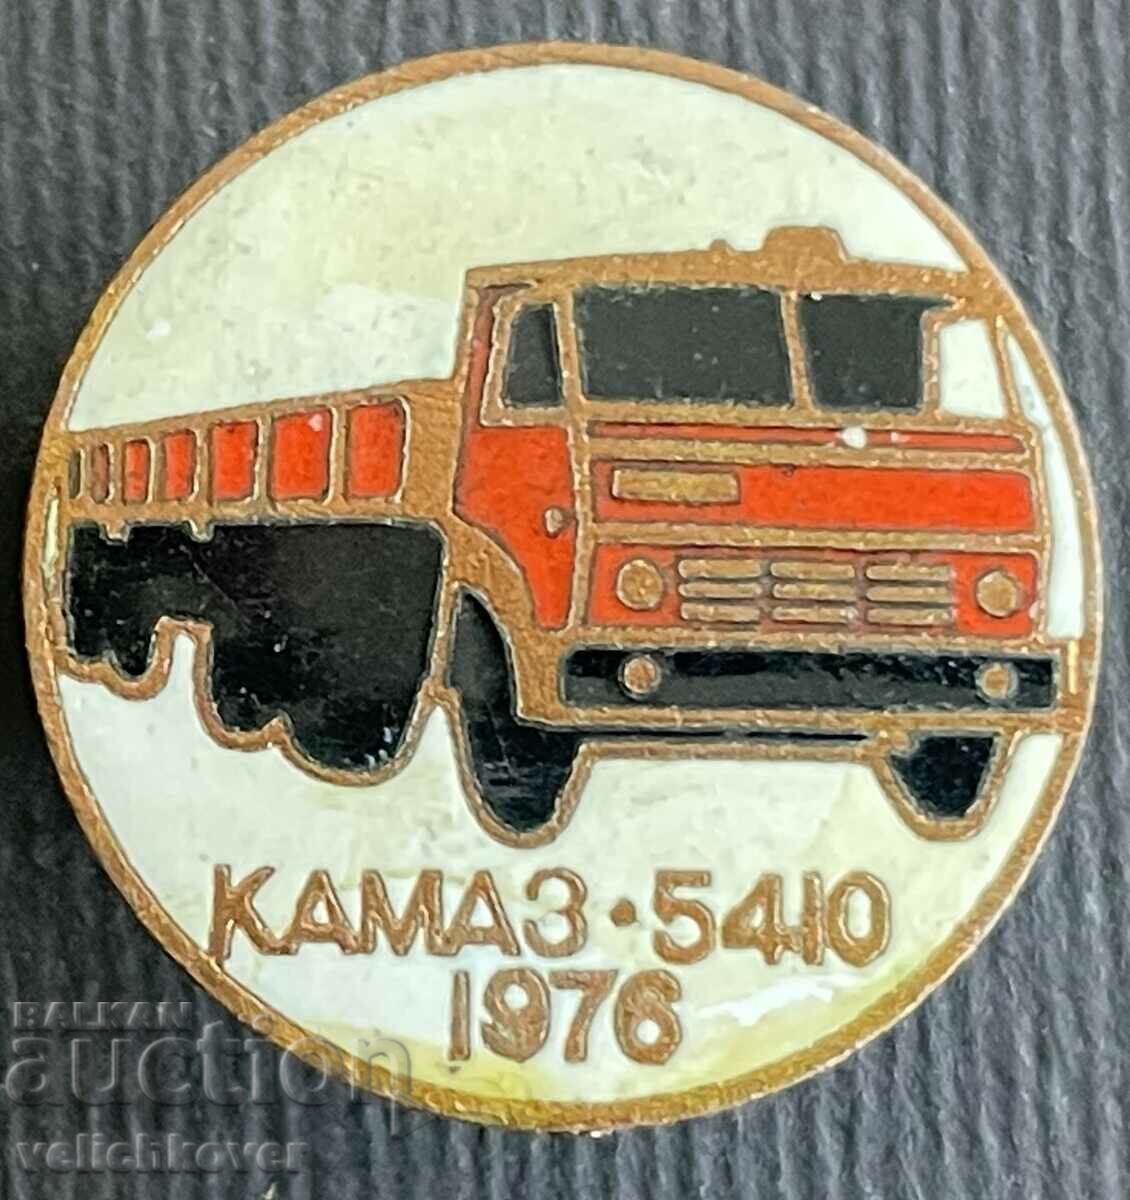 35757 USSR sign Truck Kamaz 5410 model 1976. Email